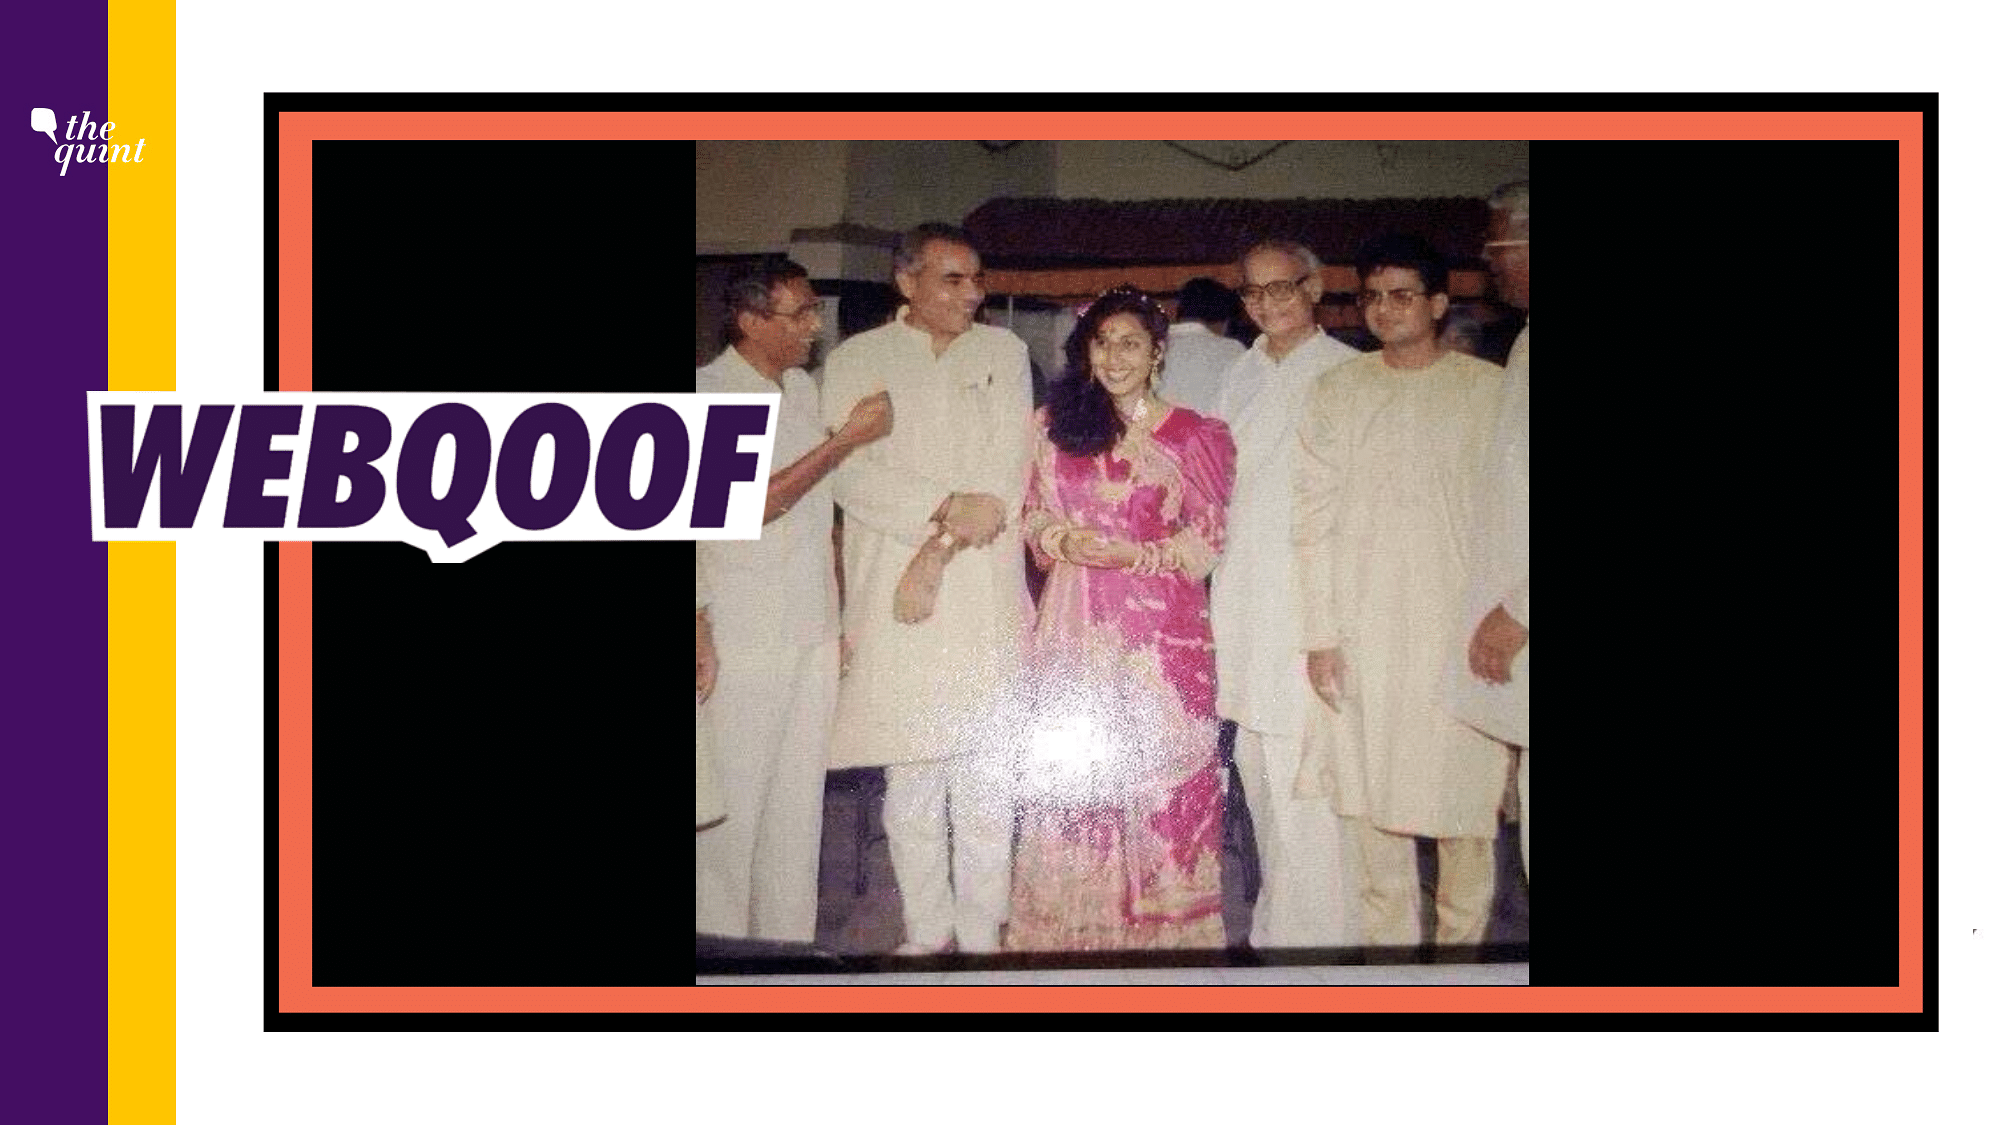 Keyur Chapatwala confirmed that the woman standing next to Modi is his sister, Alpa Chapatwala. 